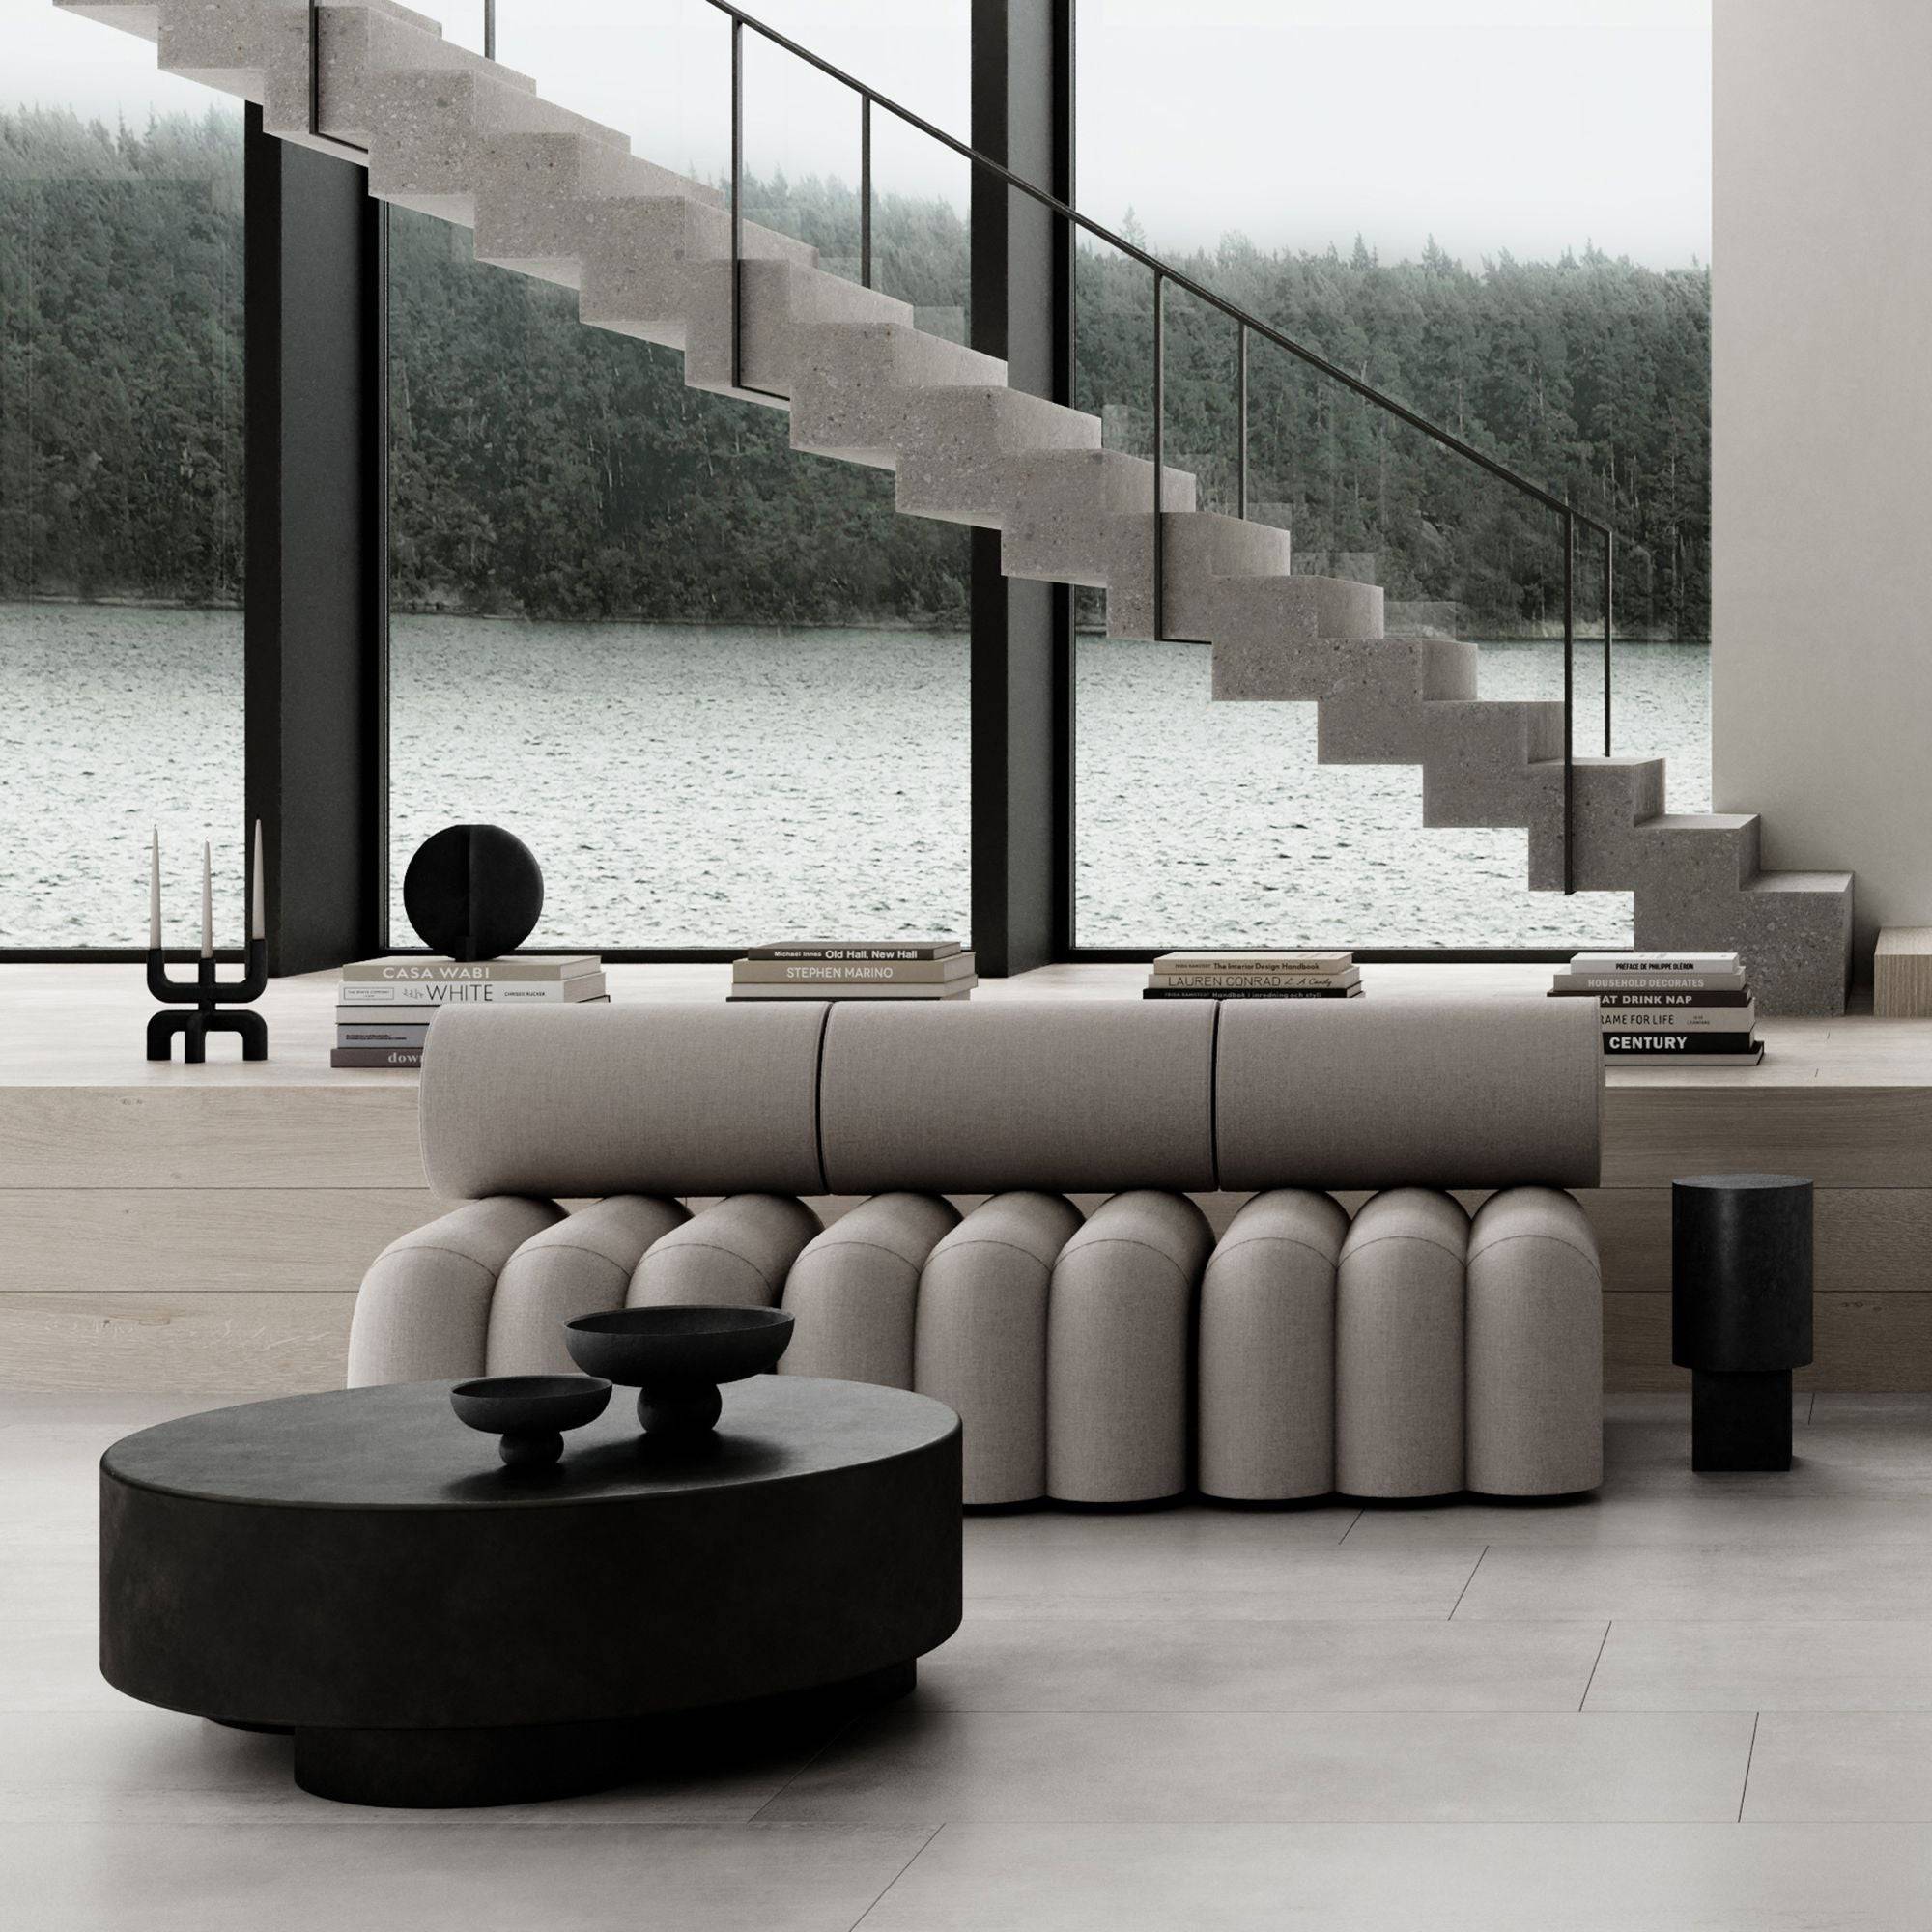 Foku Lounge Chair - Taupe Palazzo - THAT COOL LIVING